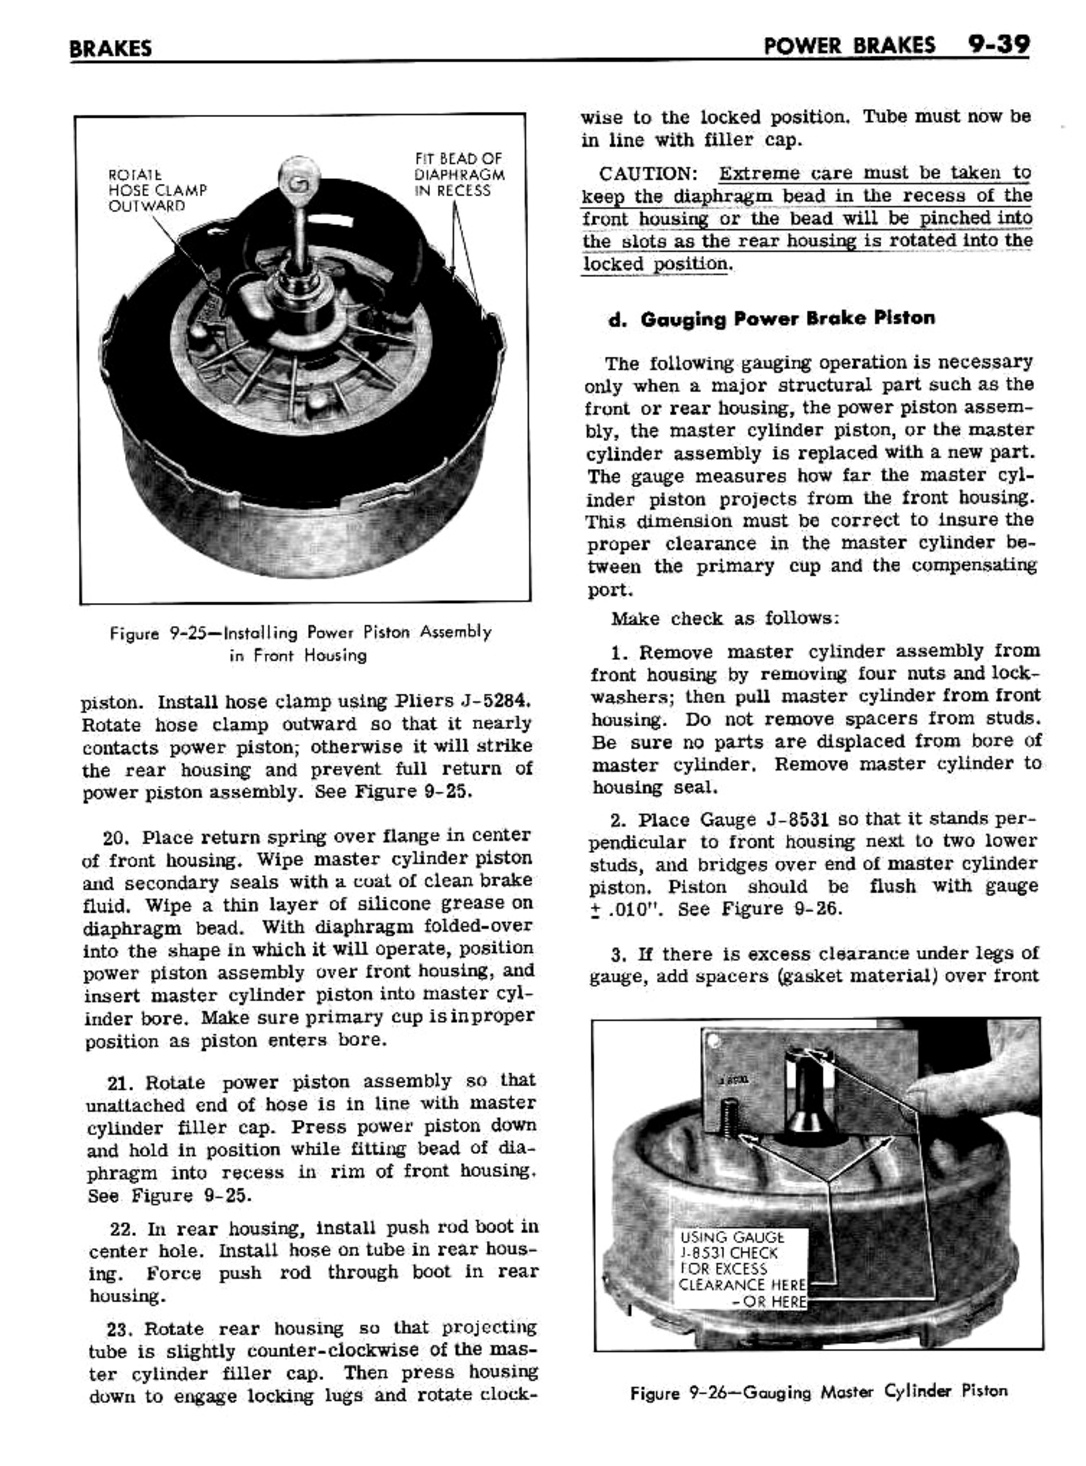 n_09 1961 Buick Shop Manual - Brakes-039-039.jpg